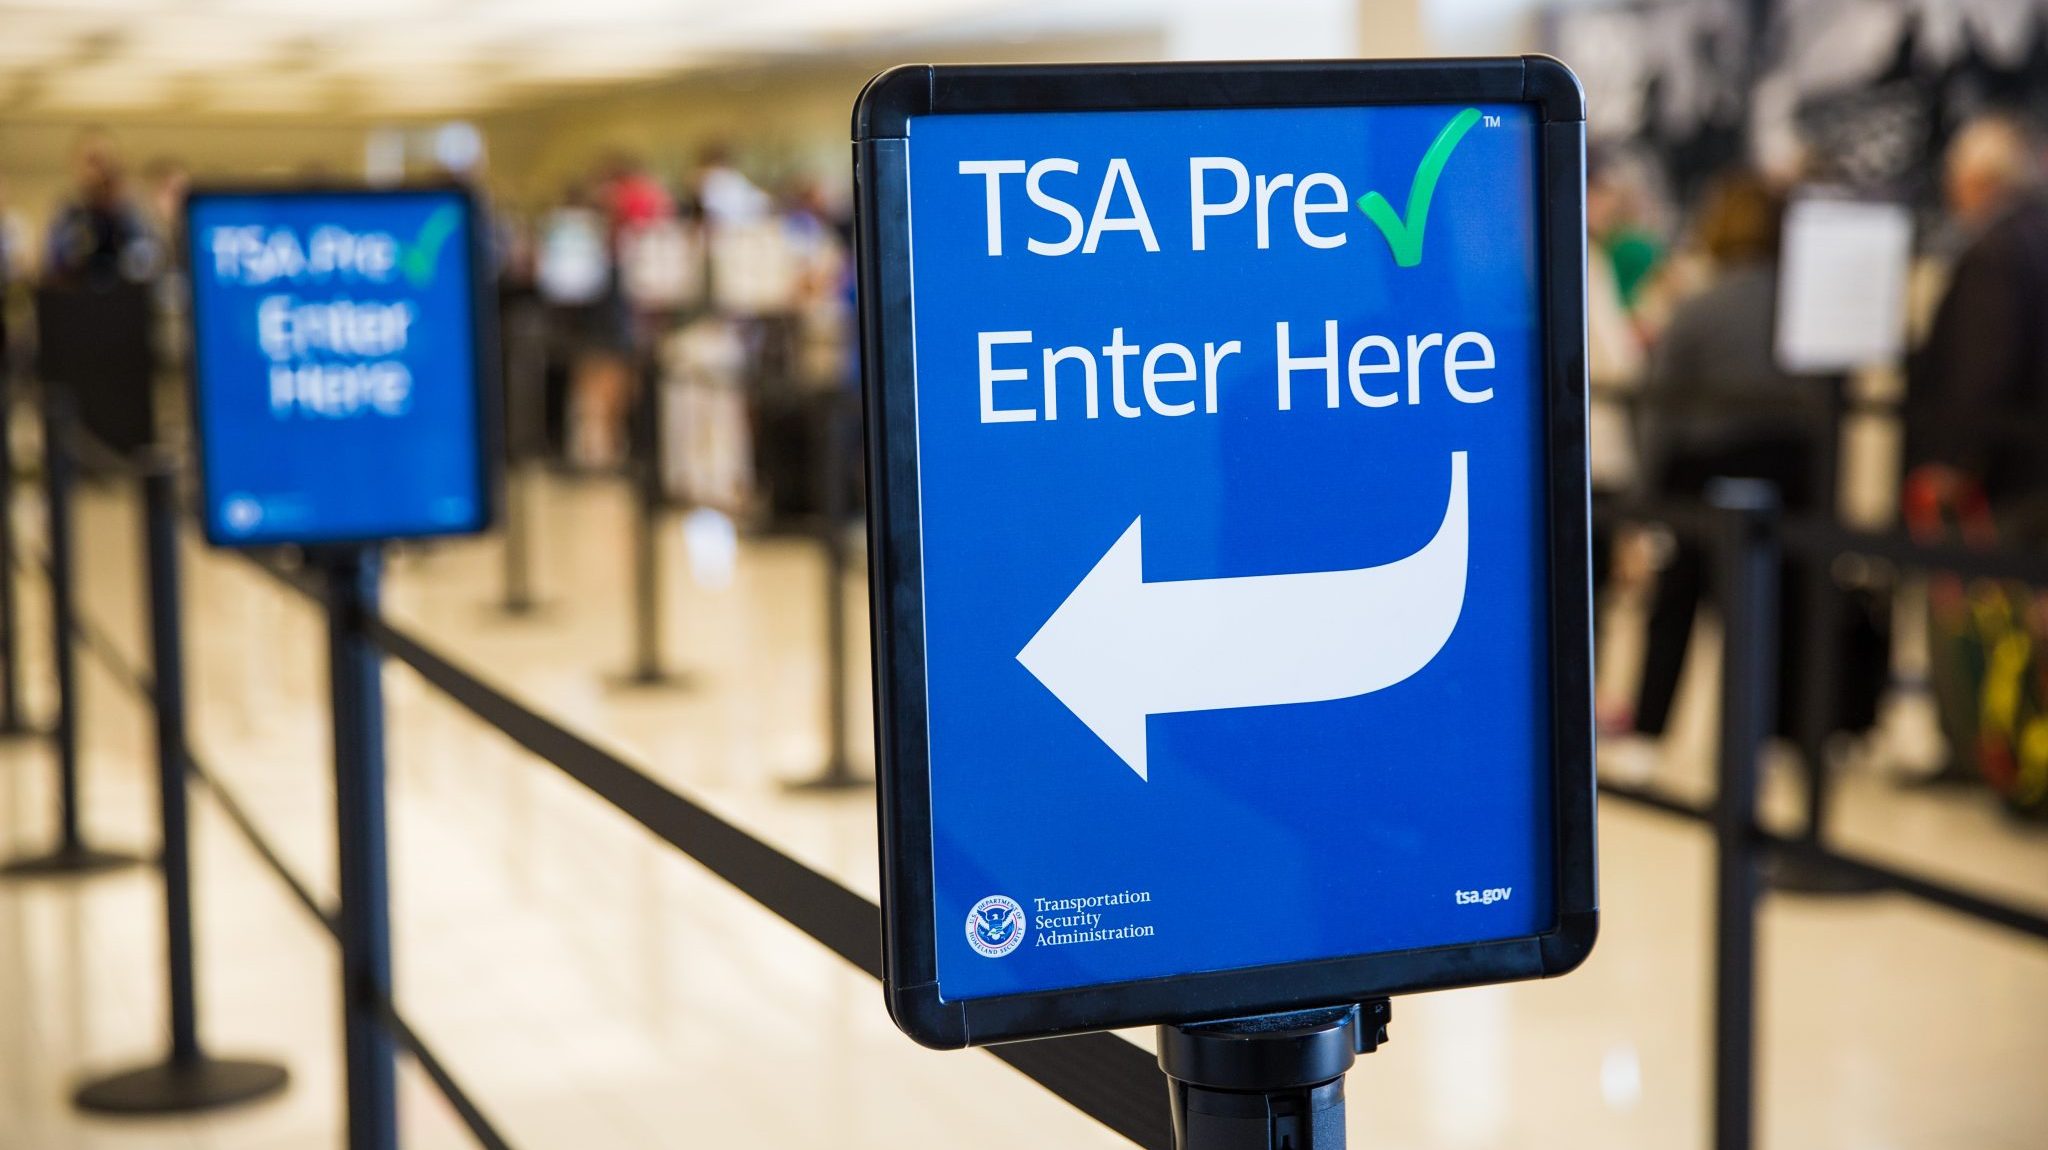 Senators Want to Limit TSA’s Use of Facial Recognition Technology